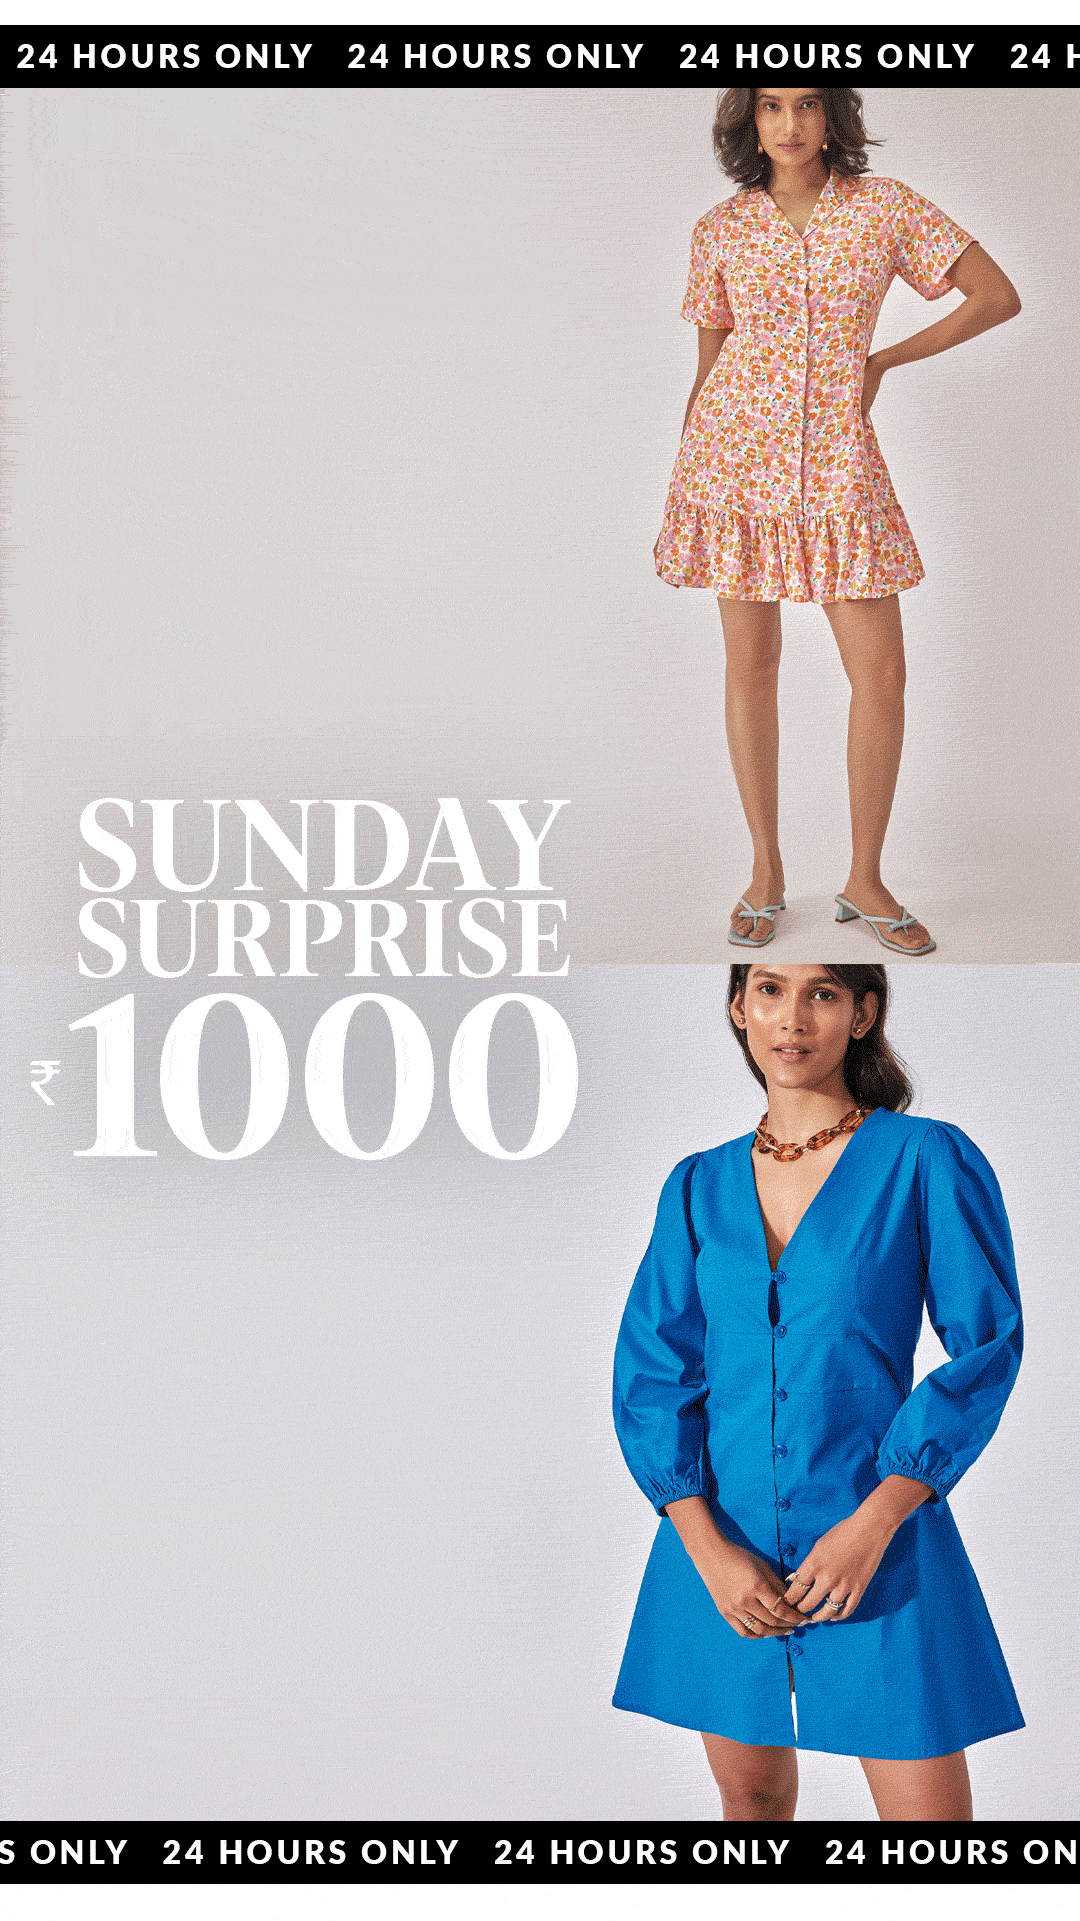 Rs.1000 each: A balmy floral dress + THREE charming styles